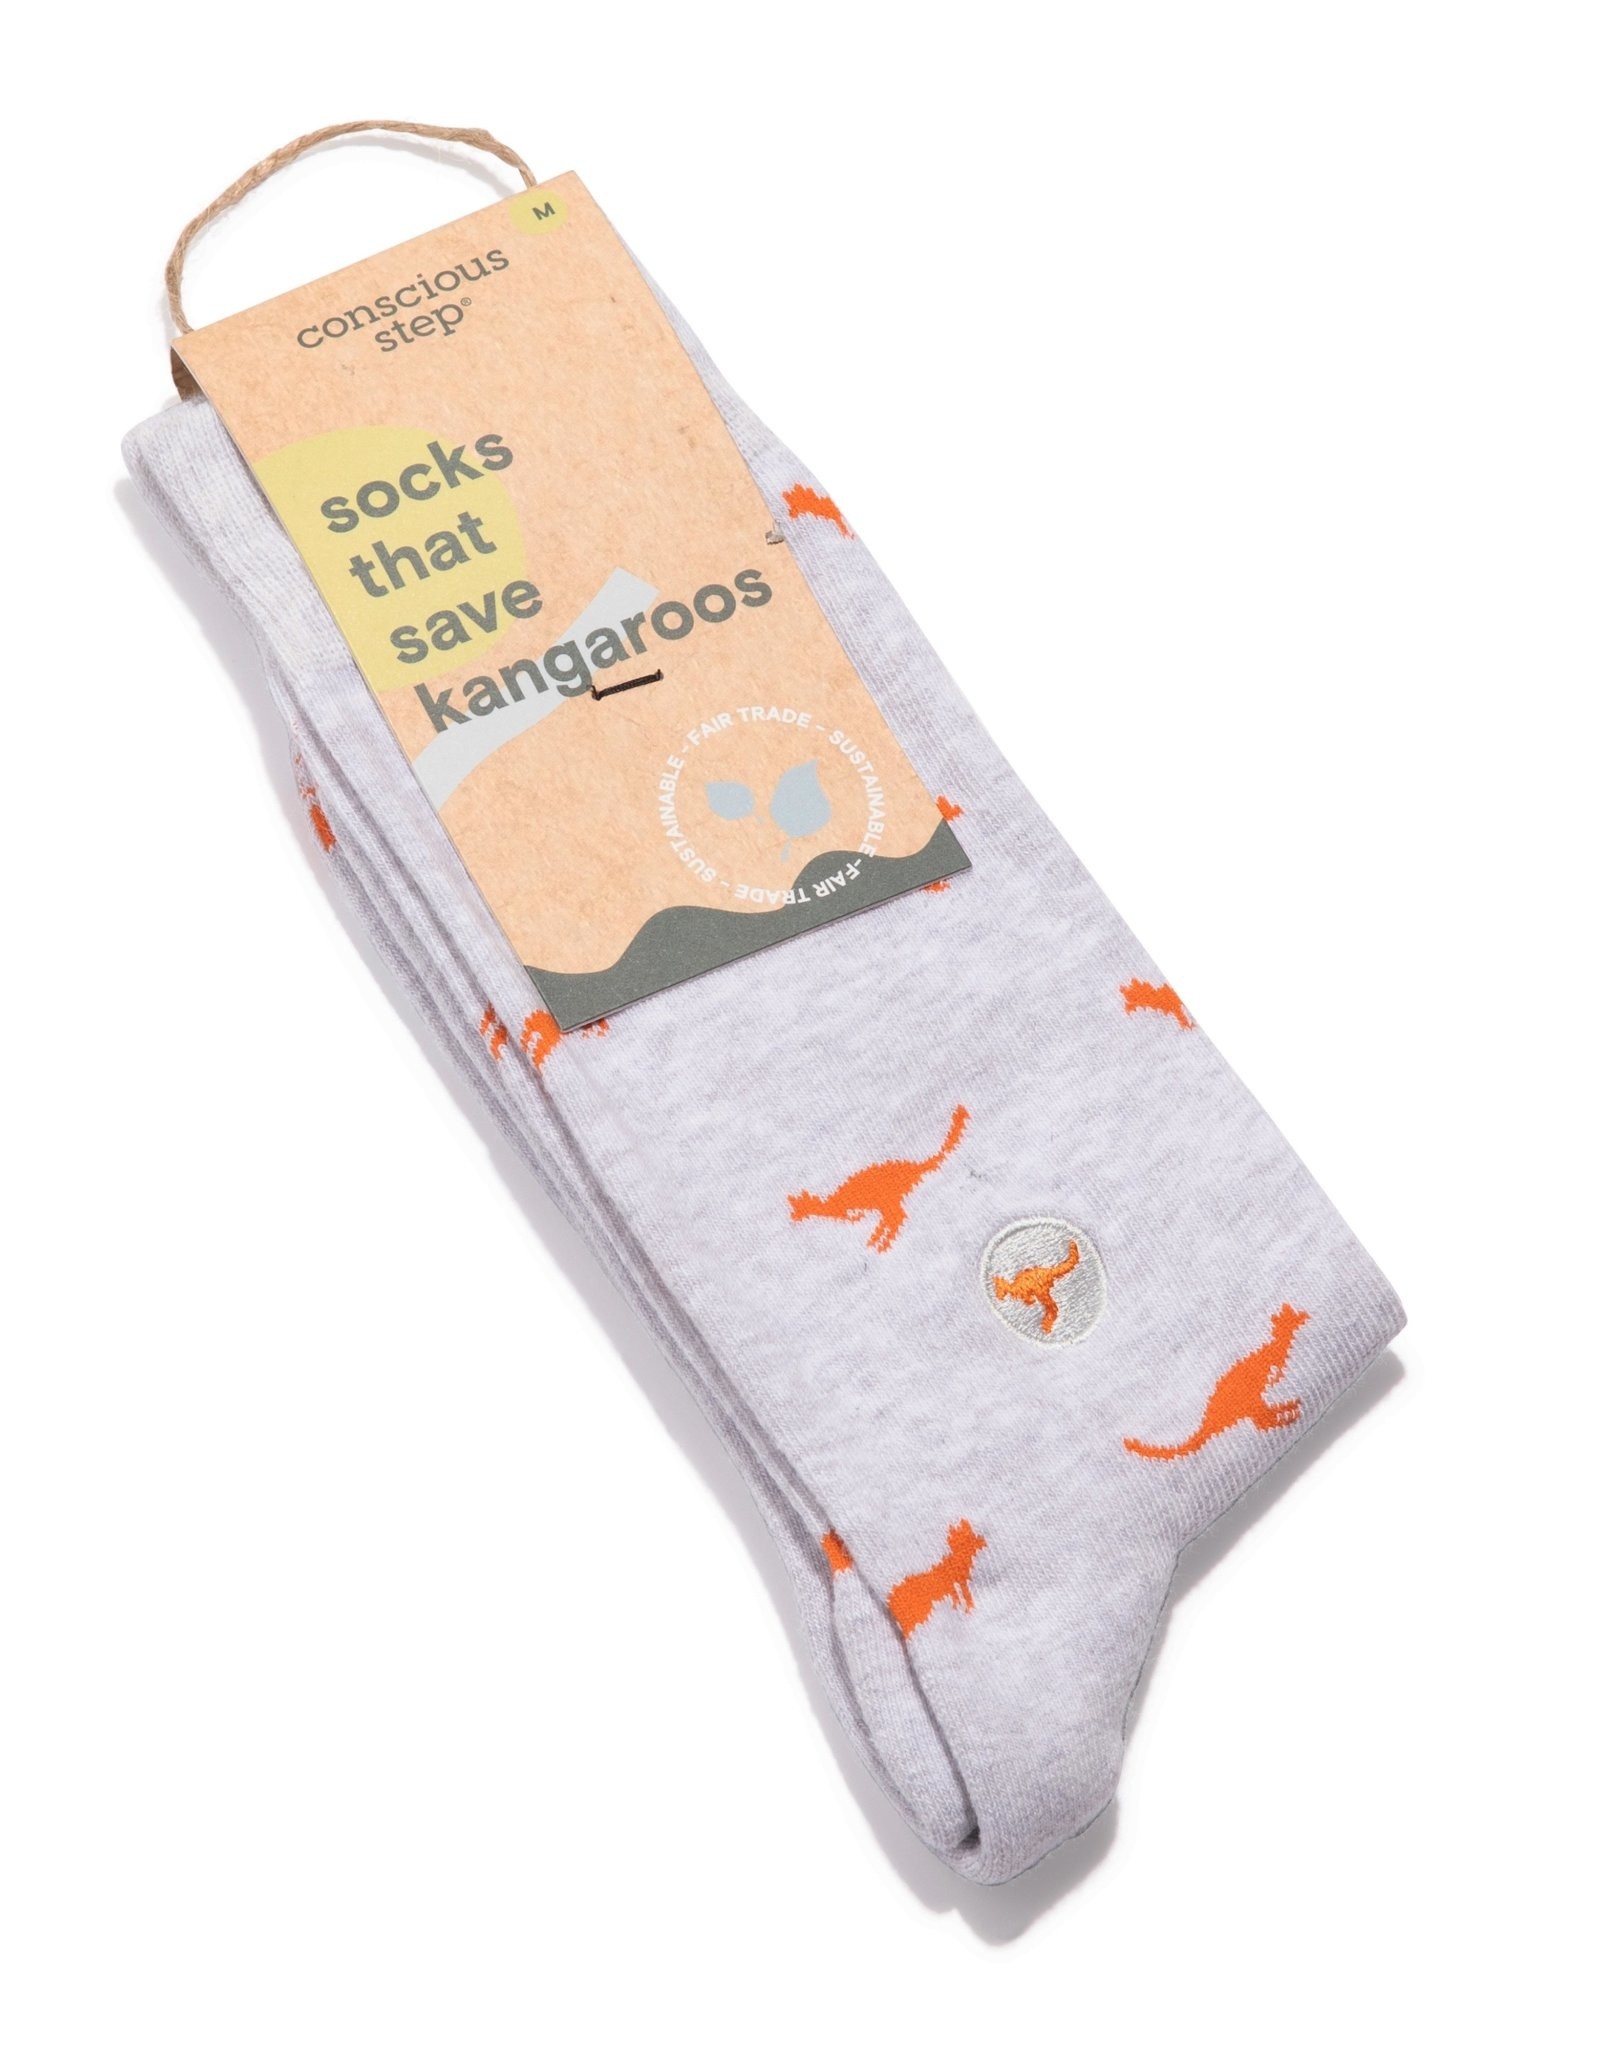 Conscious Step Socks that Protect Kangaroos